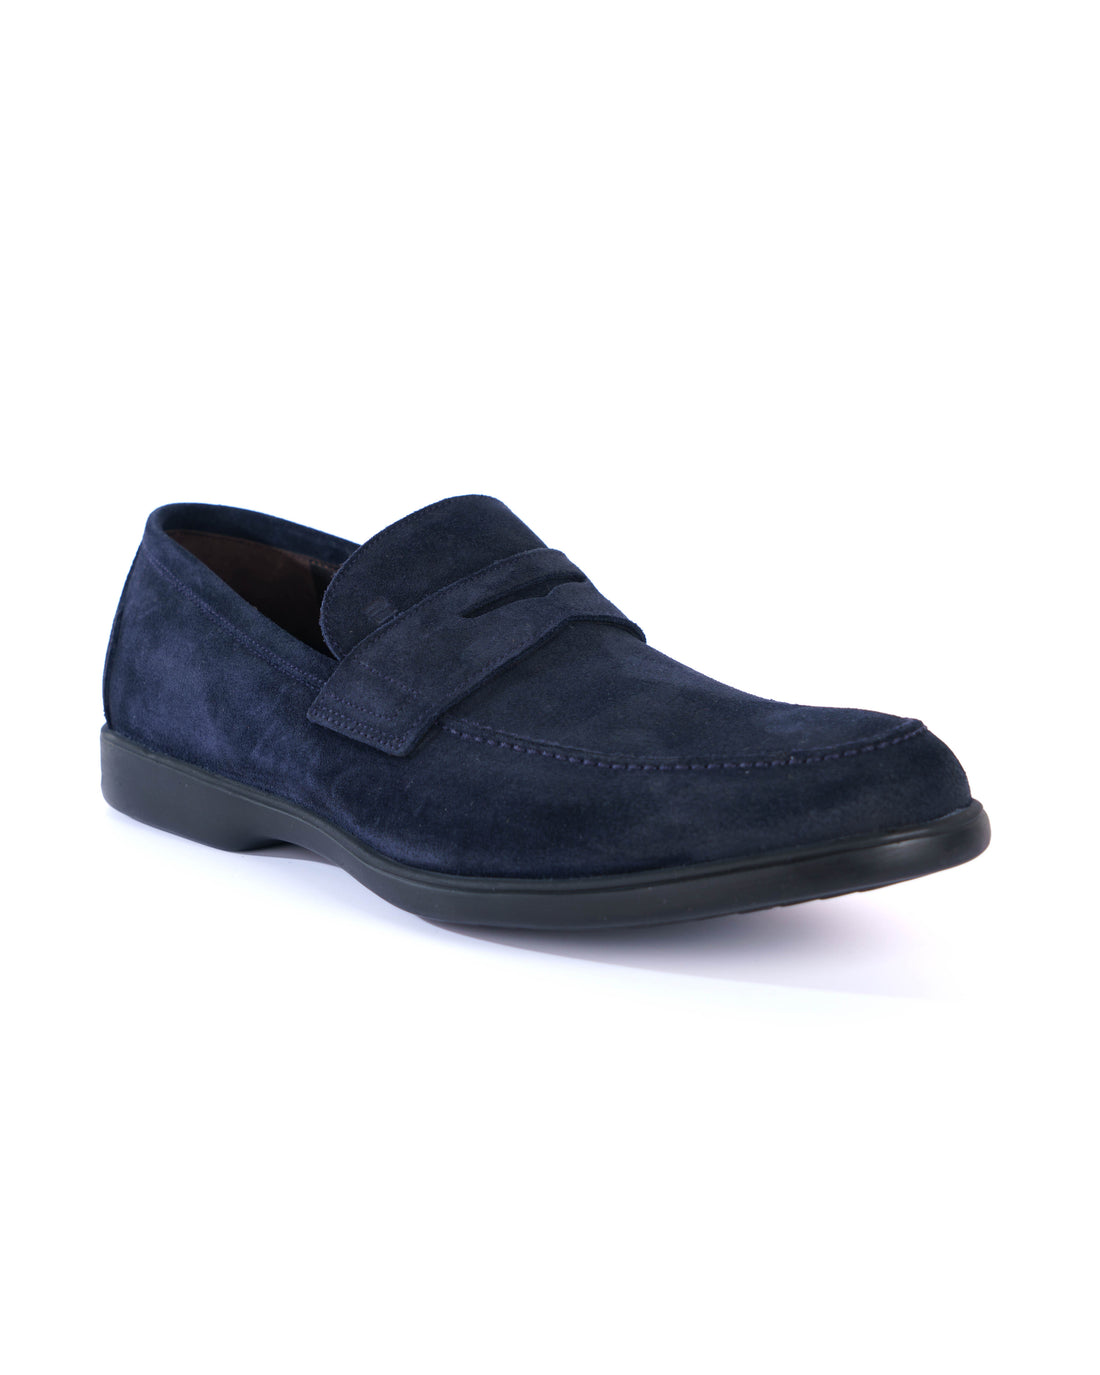 Blue Loafer Shoes